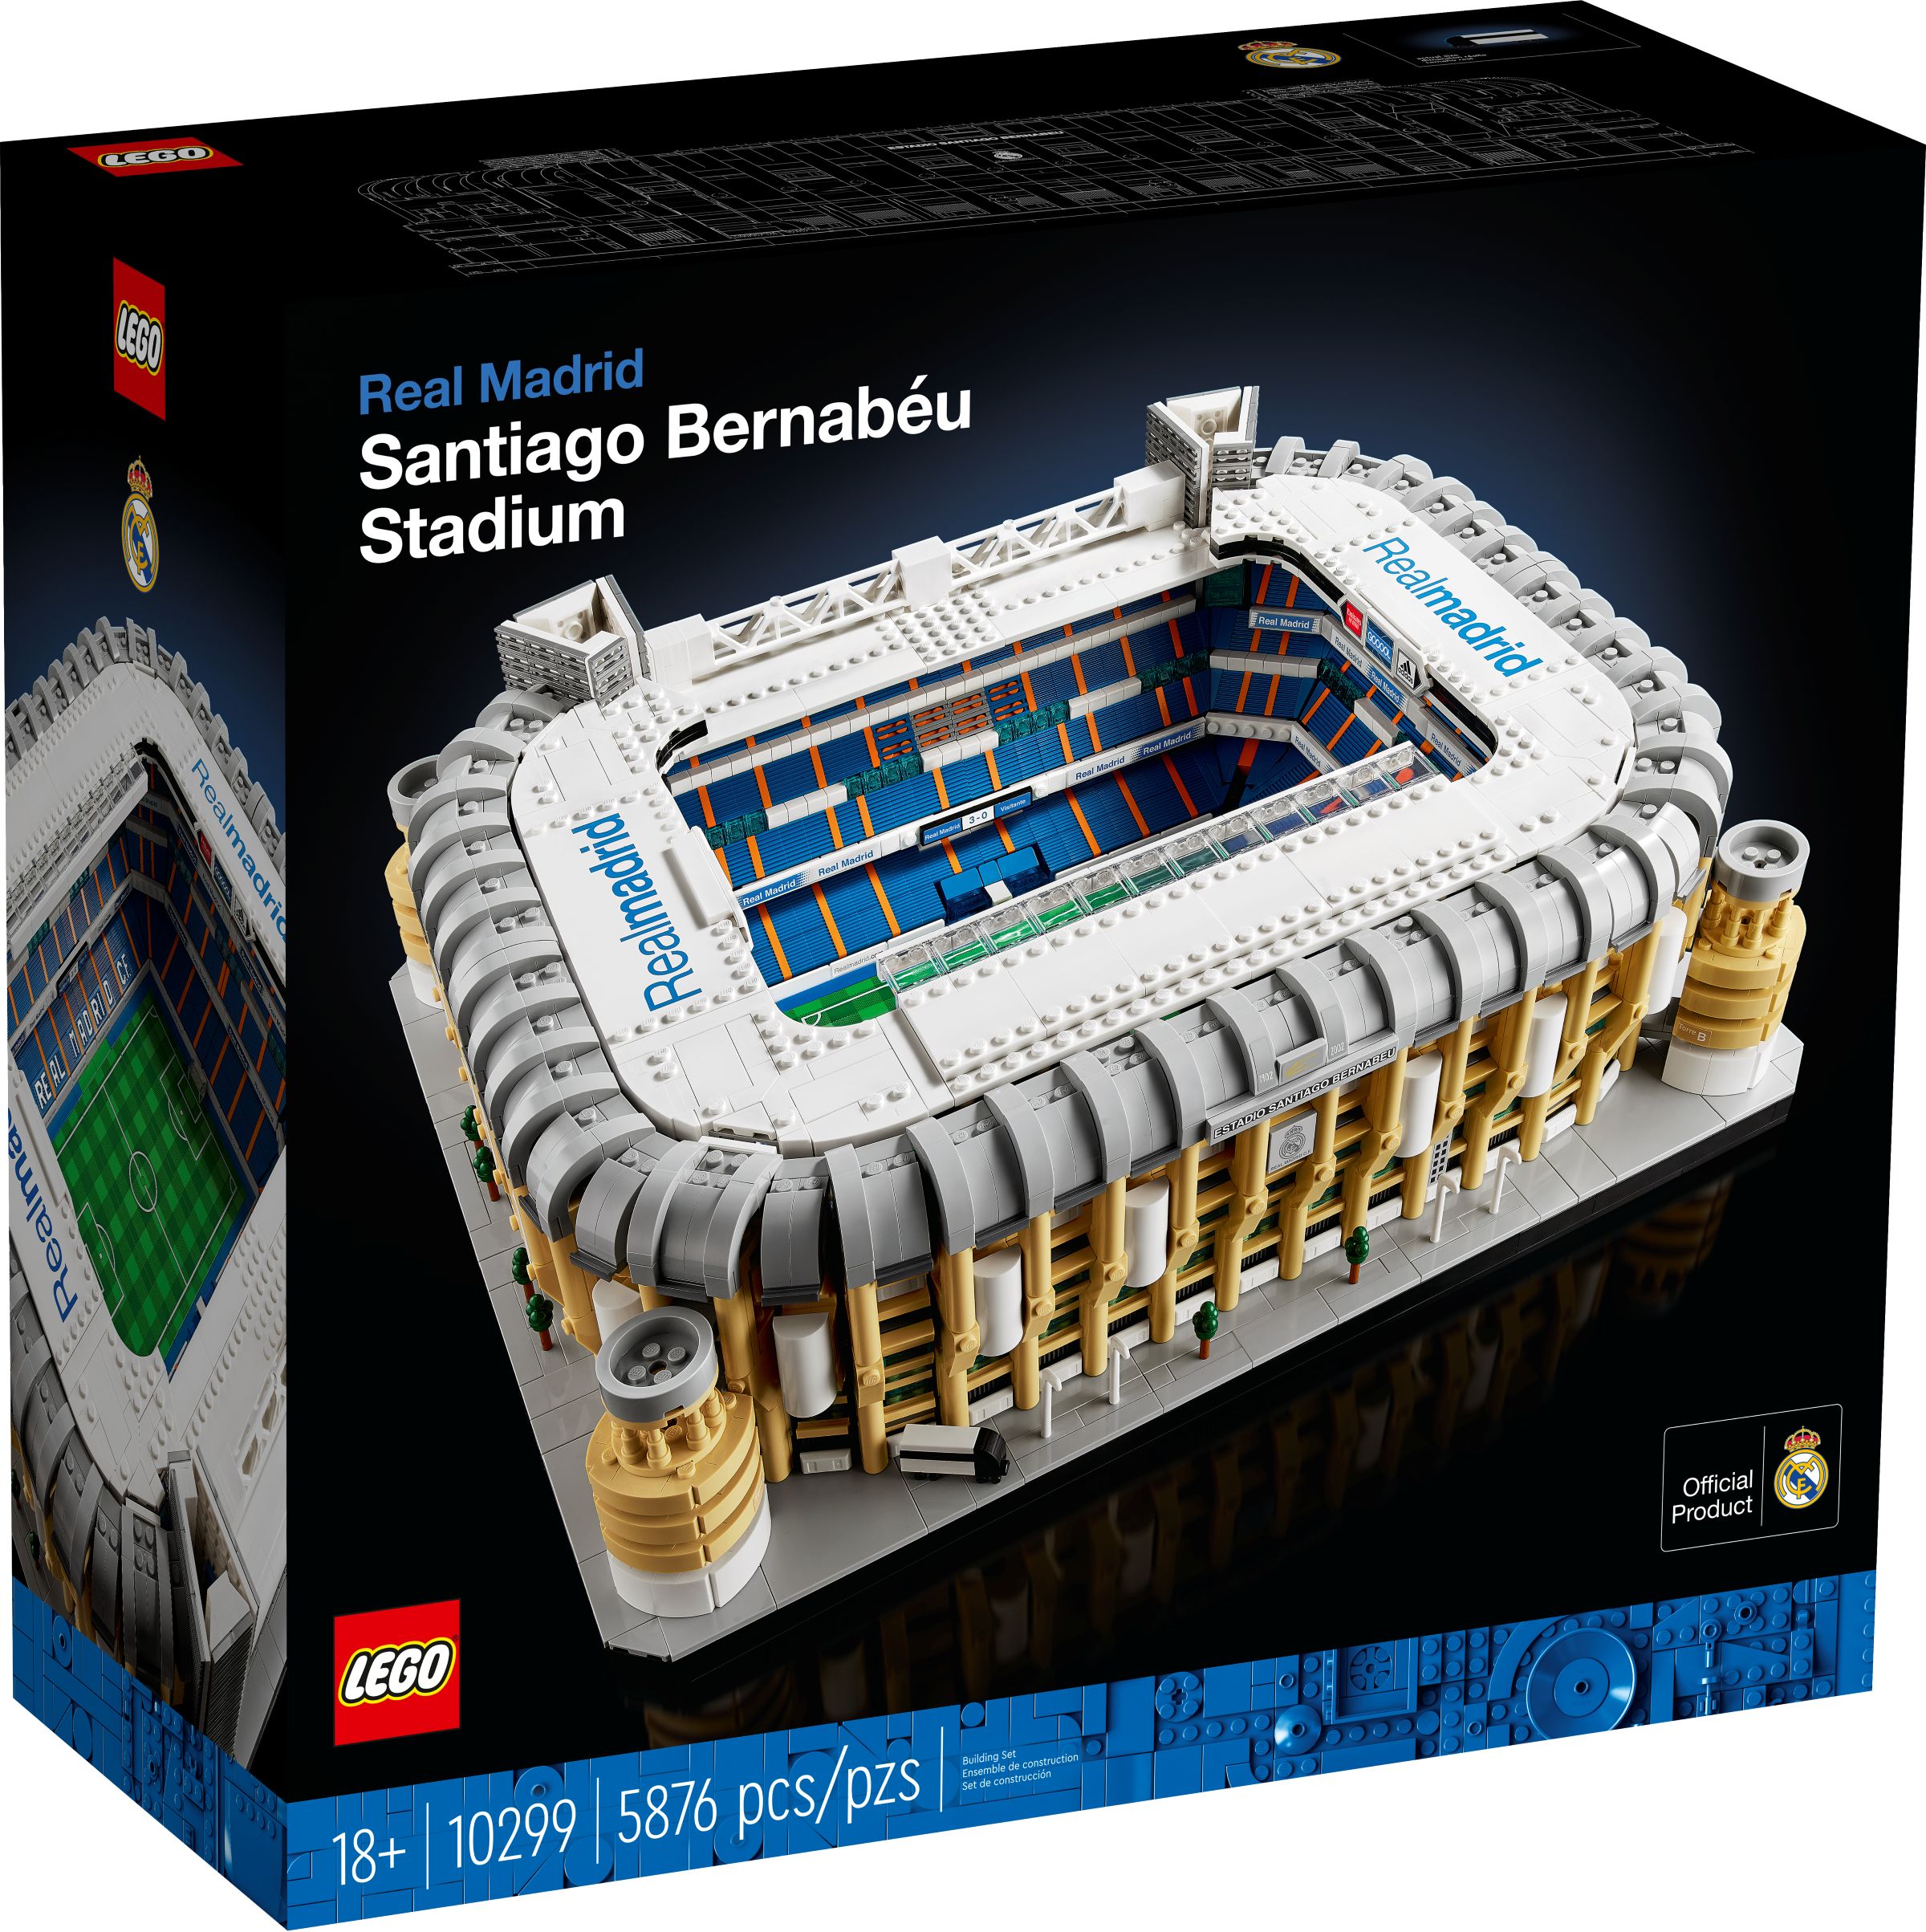 LEGO Advanced Models 10299 Real Madrid - Santiago Bernabéu Stadion LEGO_10299_alt1.jpg